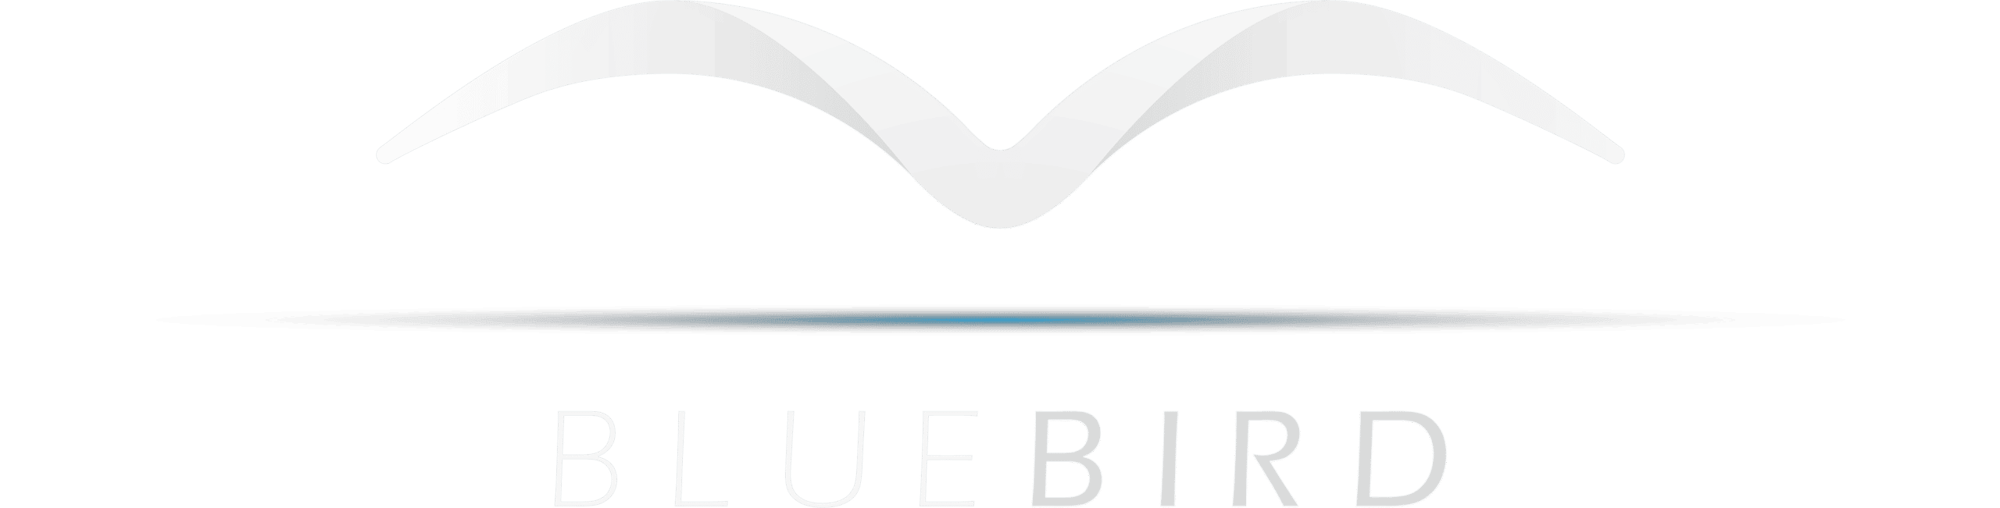 Bluebird Logo 